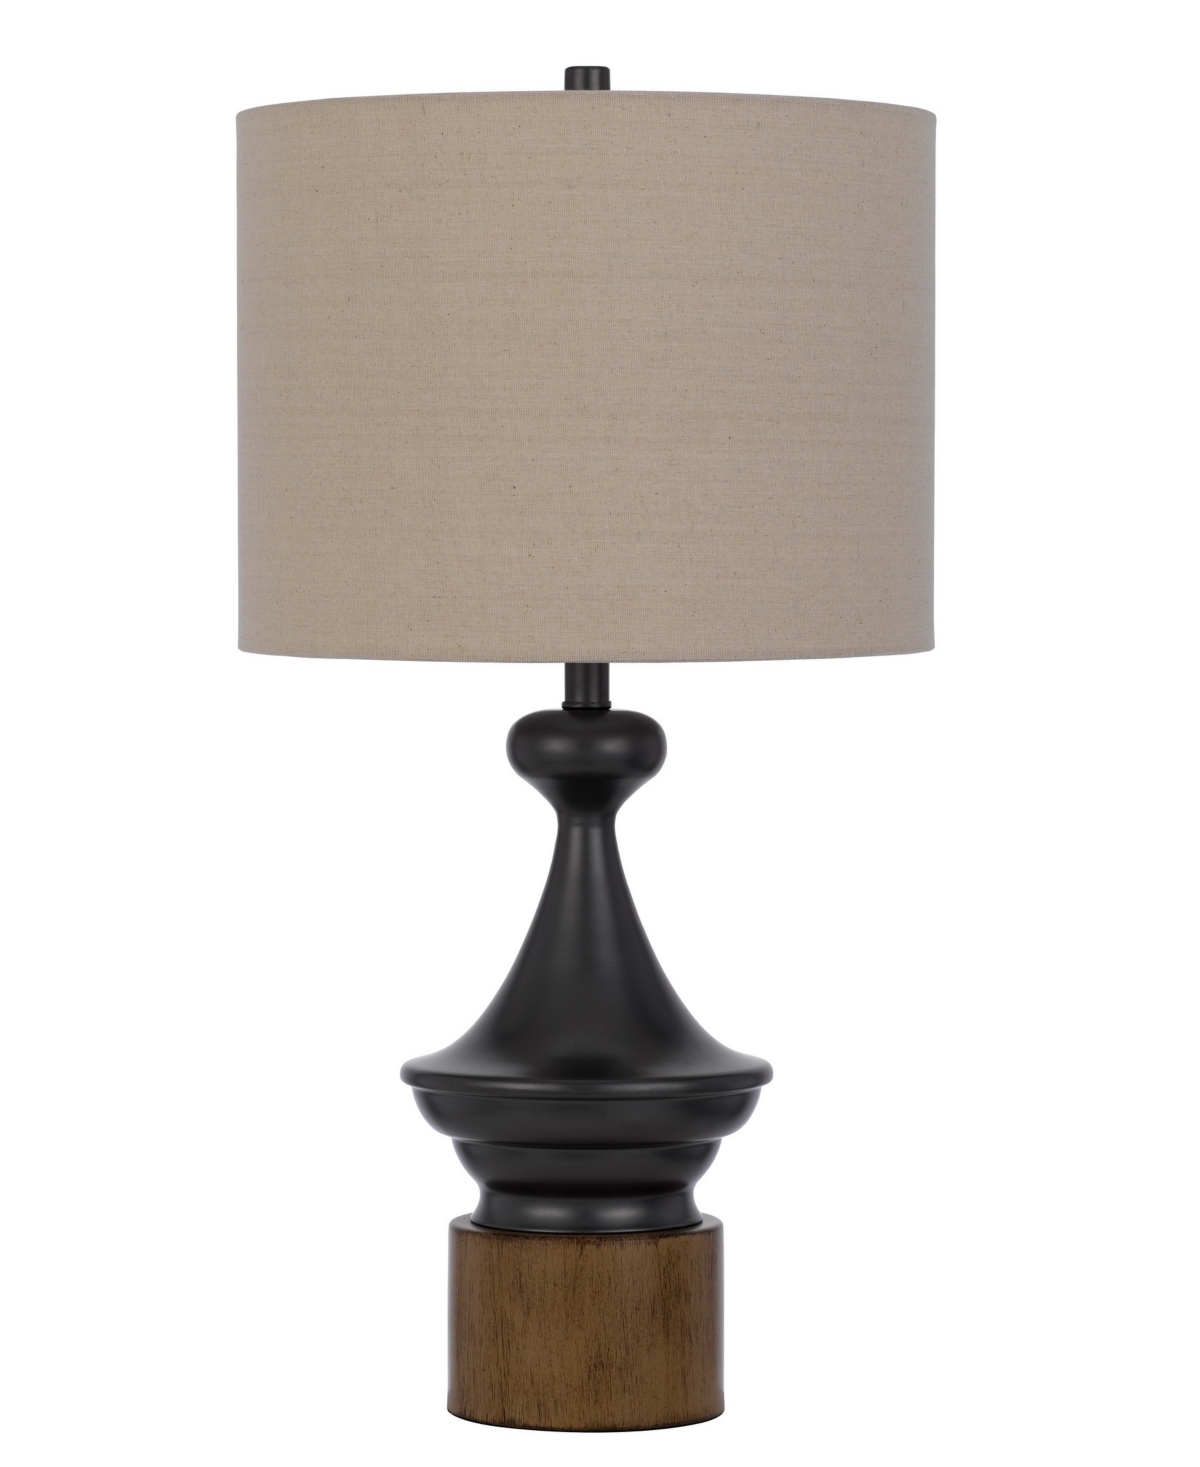 Cal Lighting 29.5" Height Metal And Wood Table Lamp In Black,wood